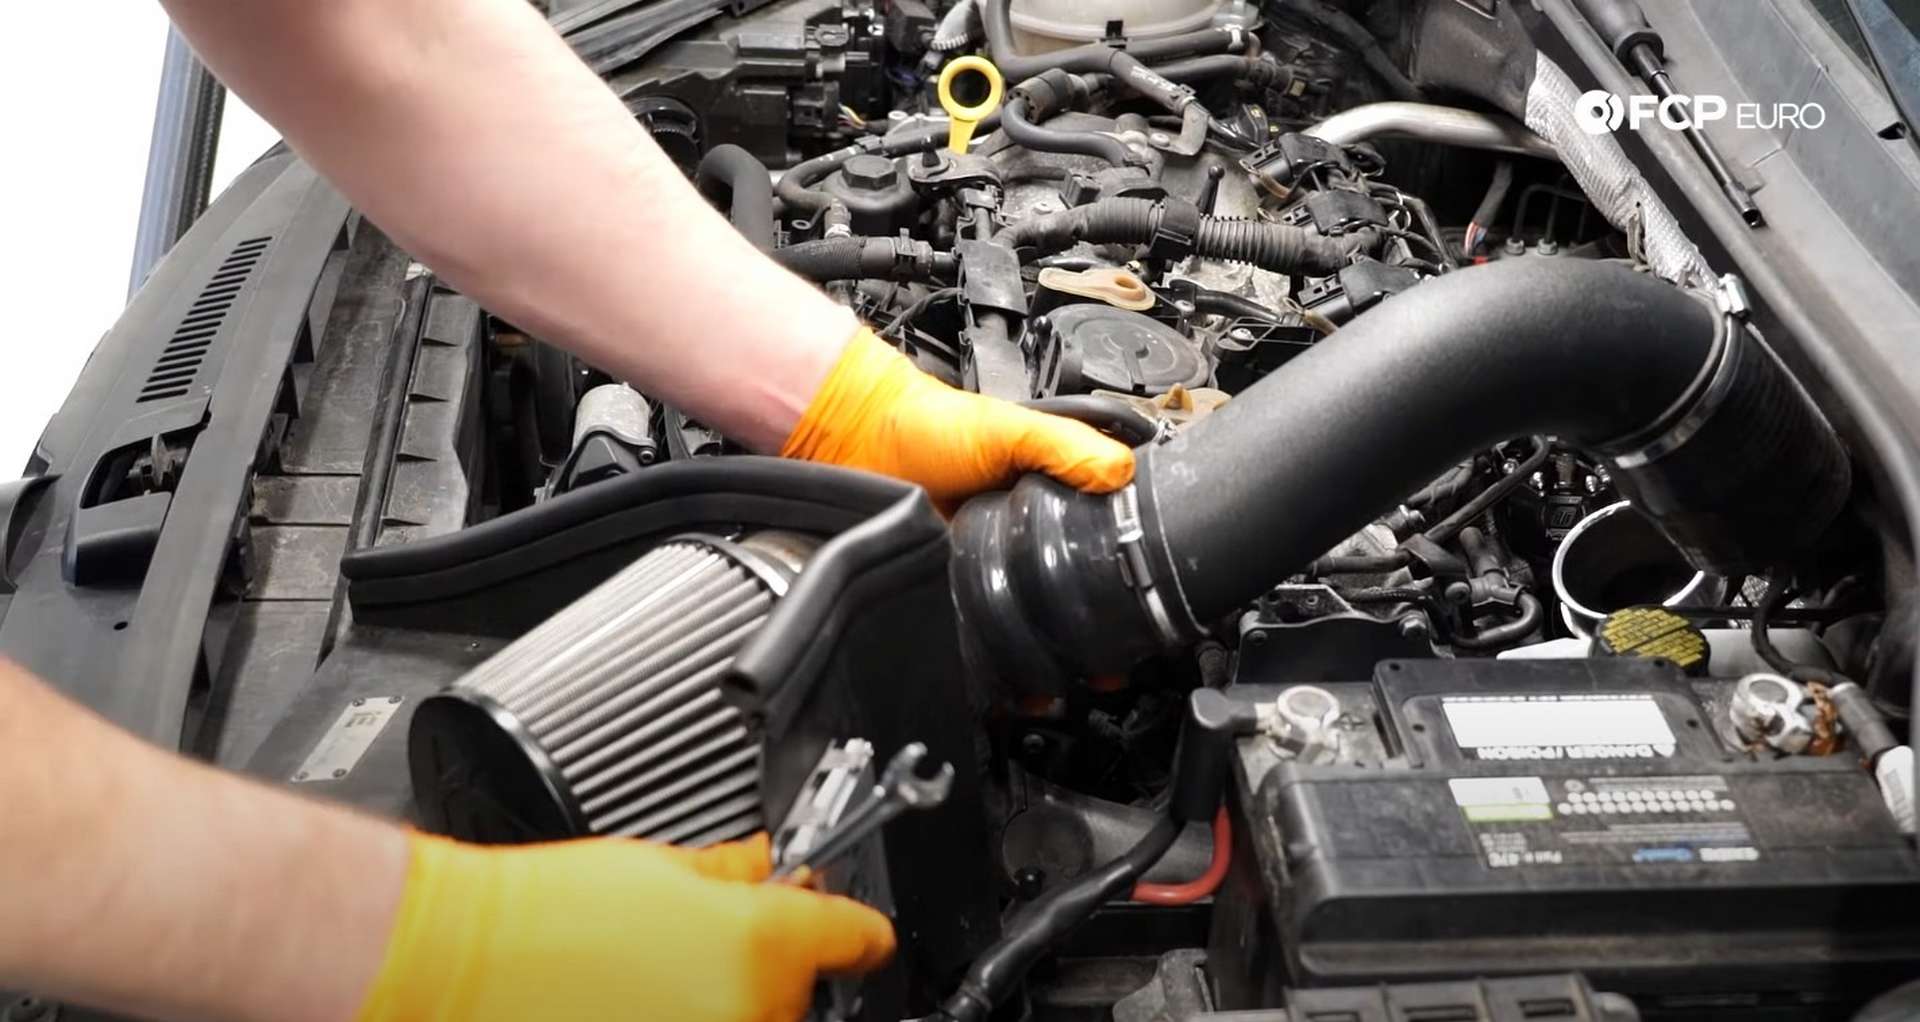 DIY MK7 VW GTI Turbocharger Upgrade removing the intake